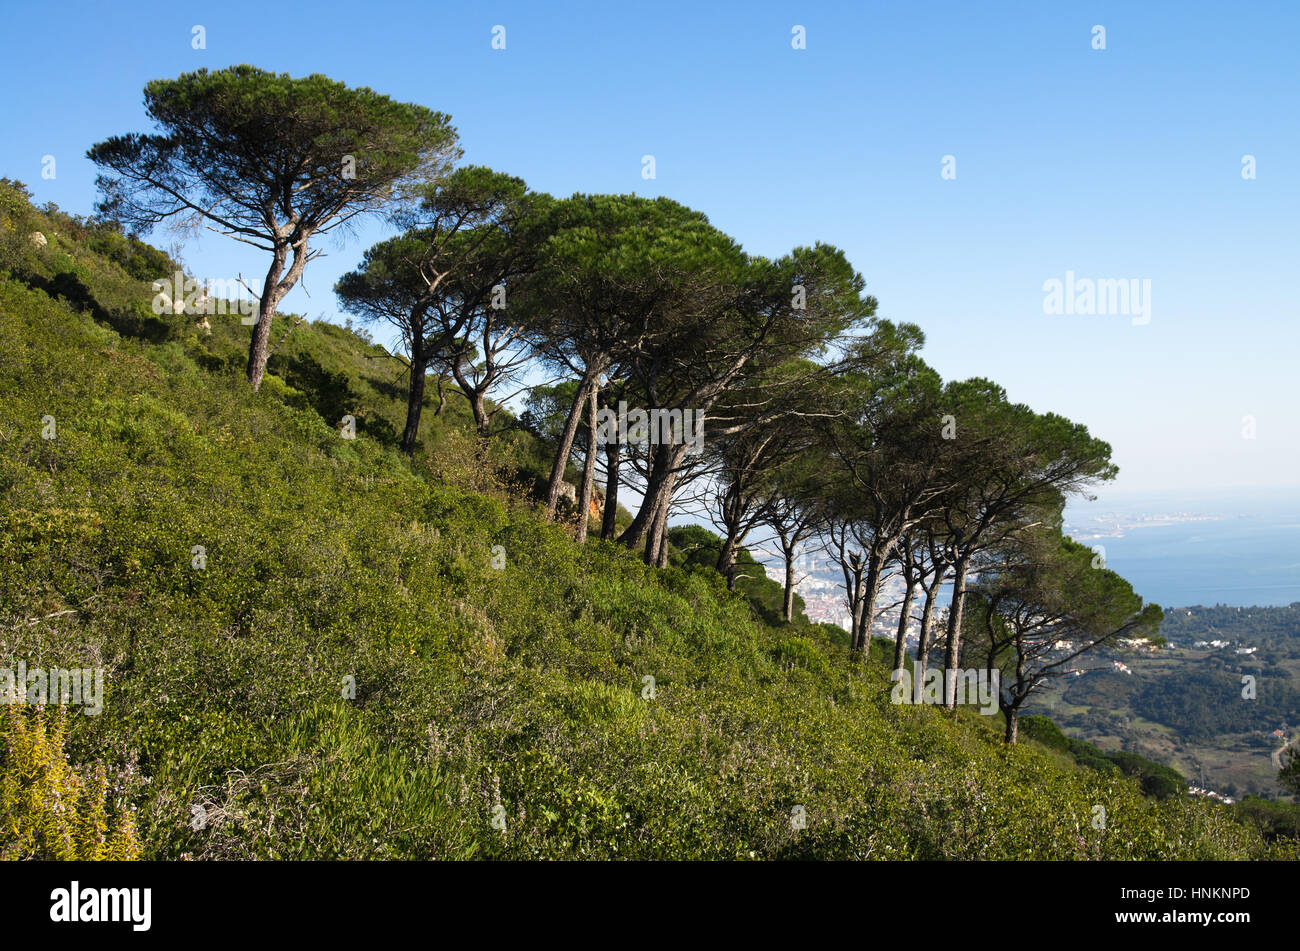 Mountain slope at Serra da Arrabida with large Stone Pine (Pinus pinea) trees, aka Parasol Pine, over ground and bush vegetation. Portugal. Stock Photo